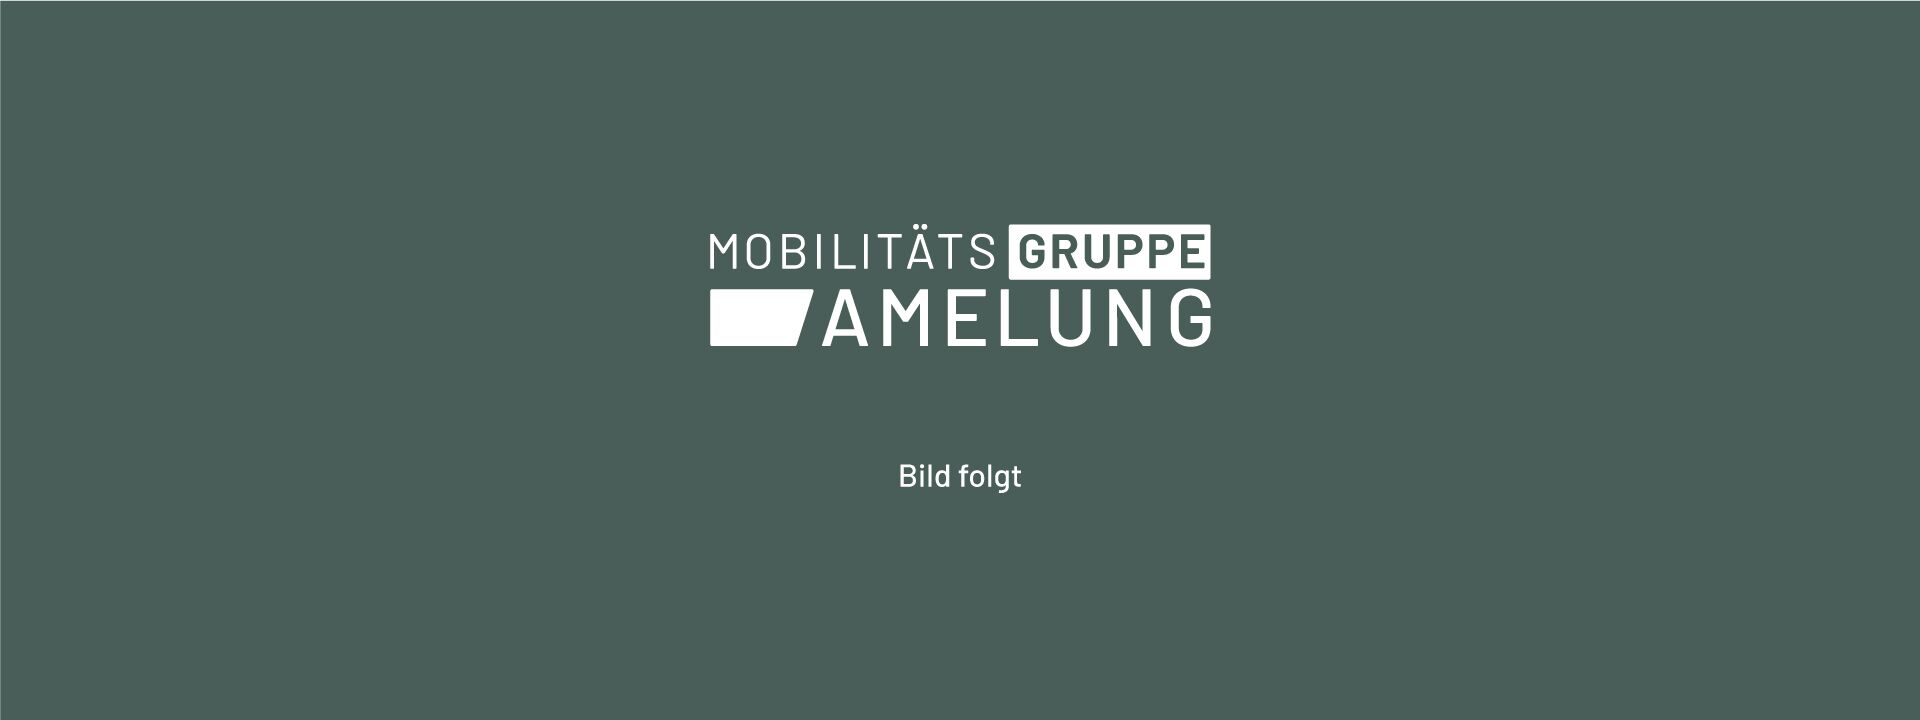 VOLVO Lüdenscheid ANDAMO Holding GmbH & Co. KG